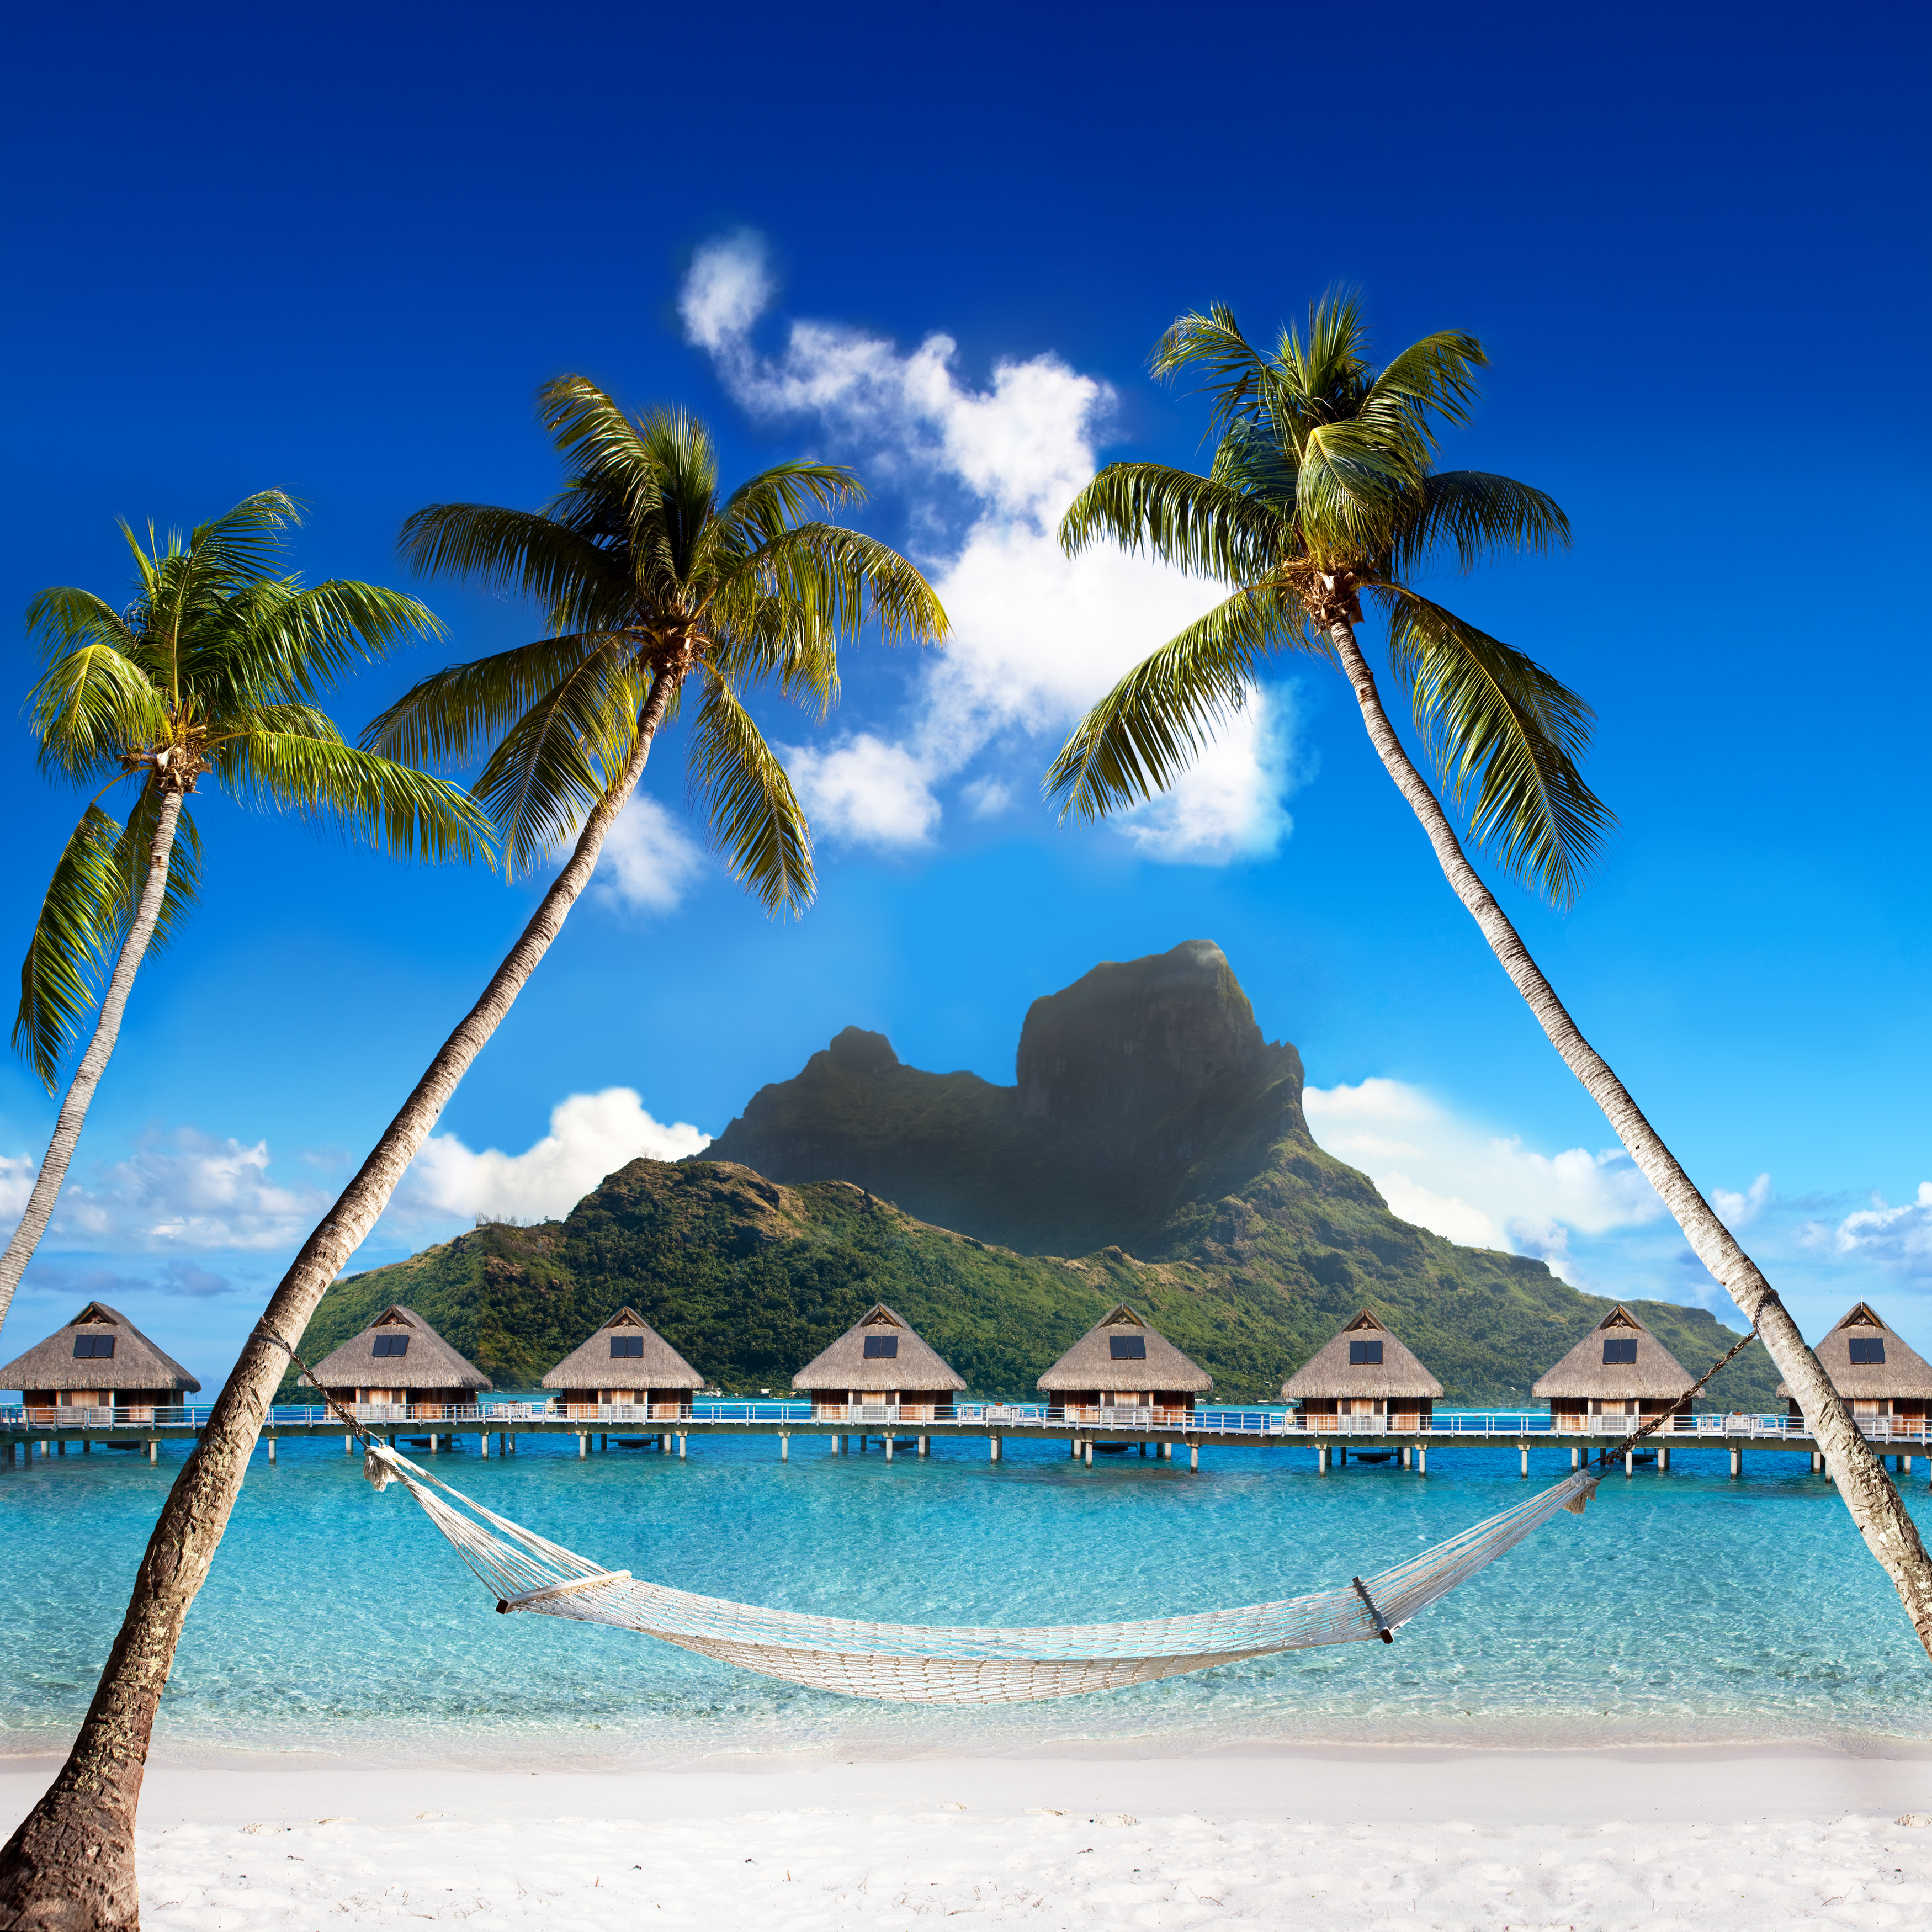 A resort in Bora Bora | Source: Shutterstock